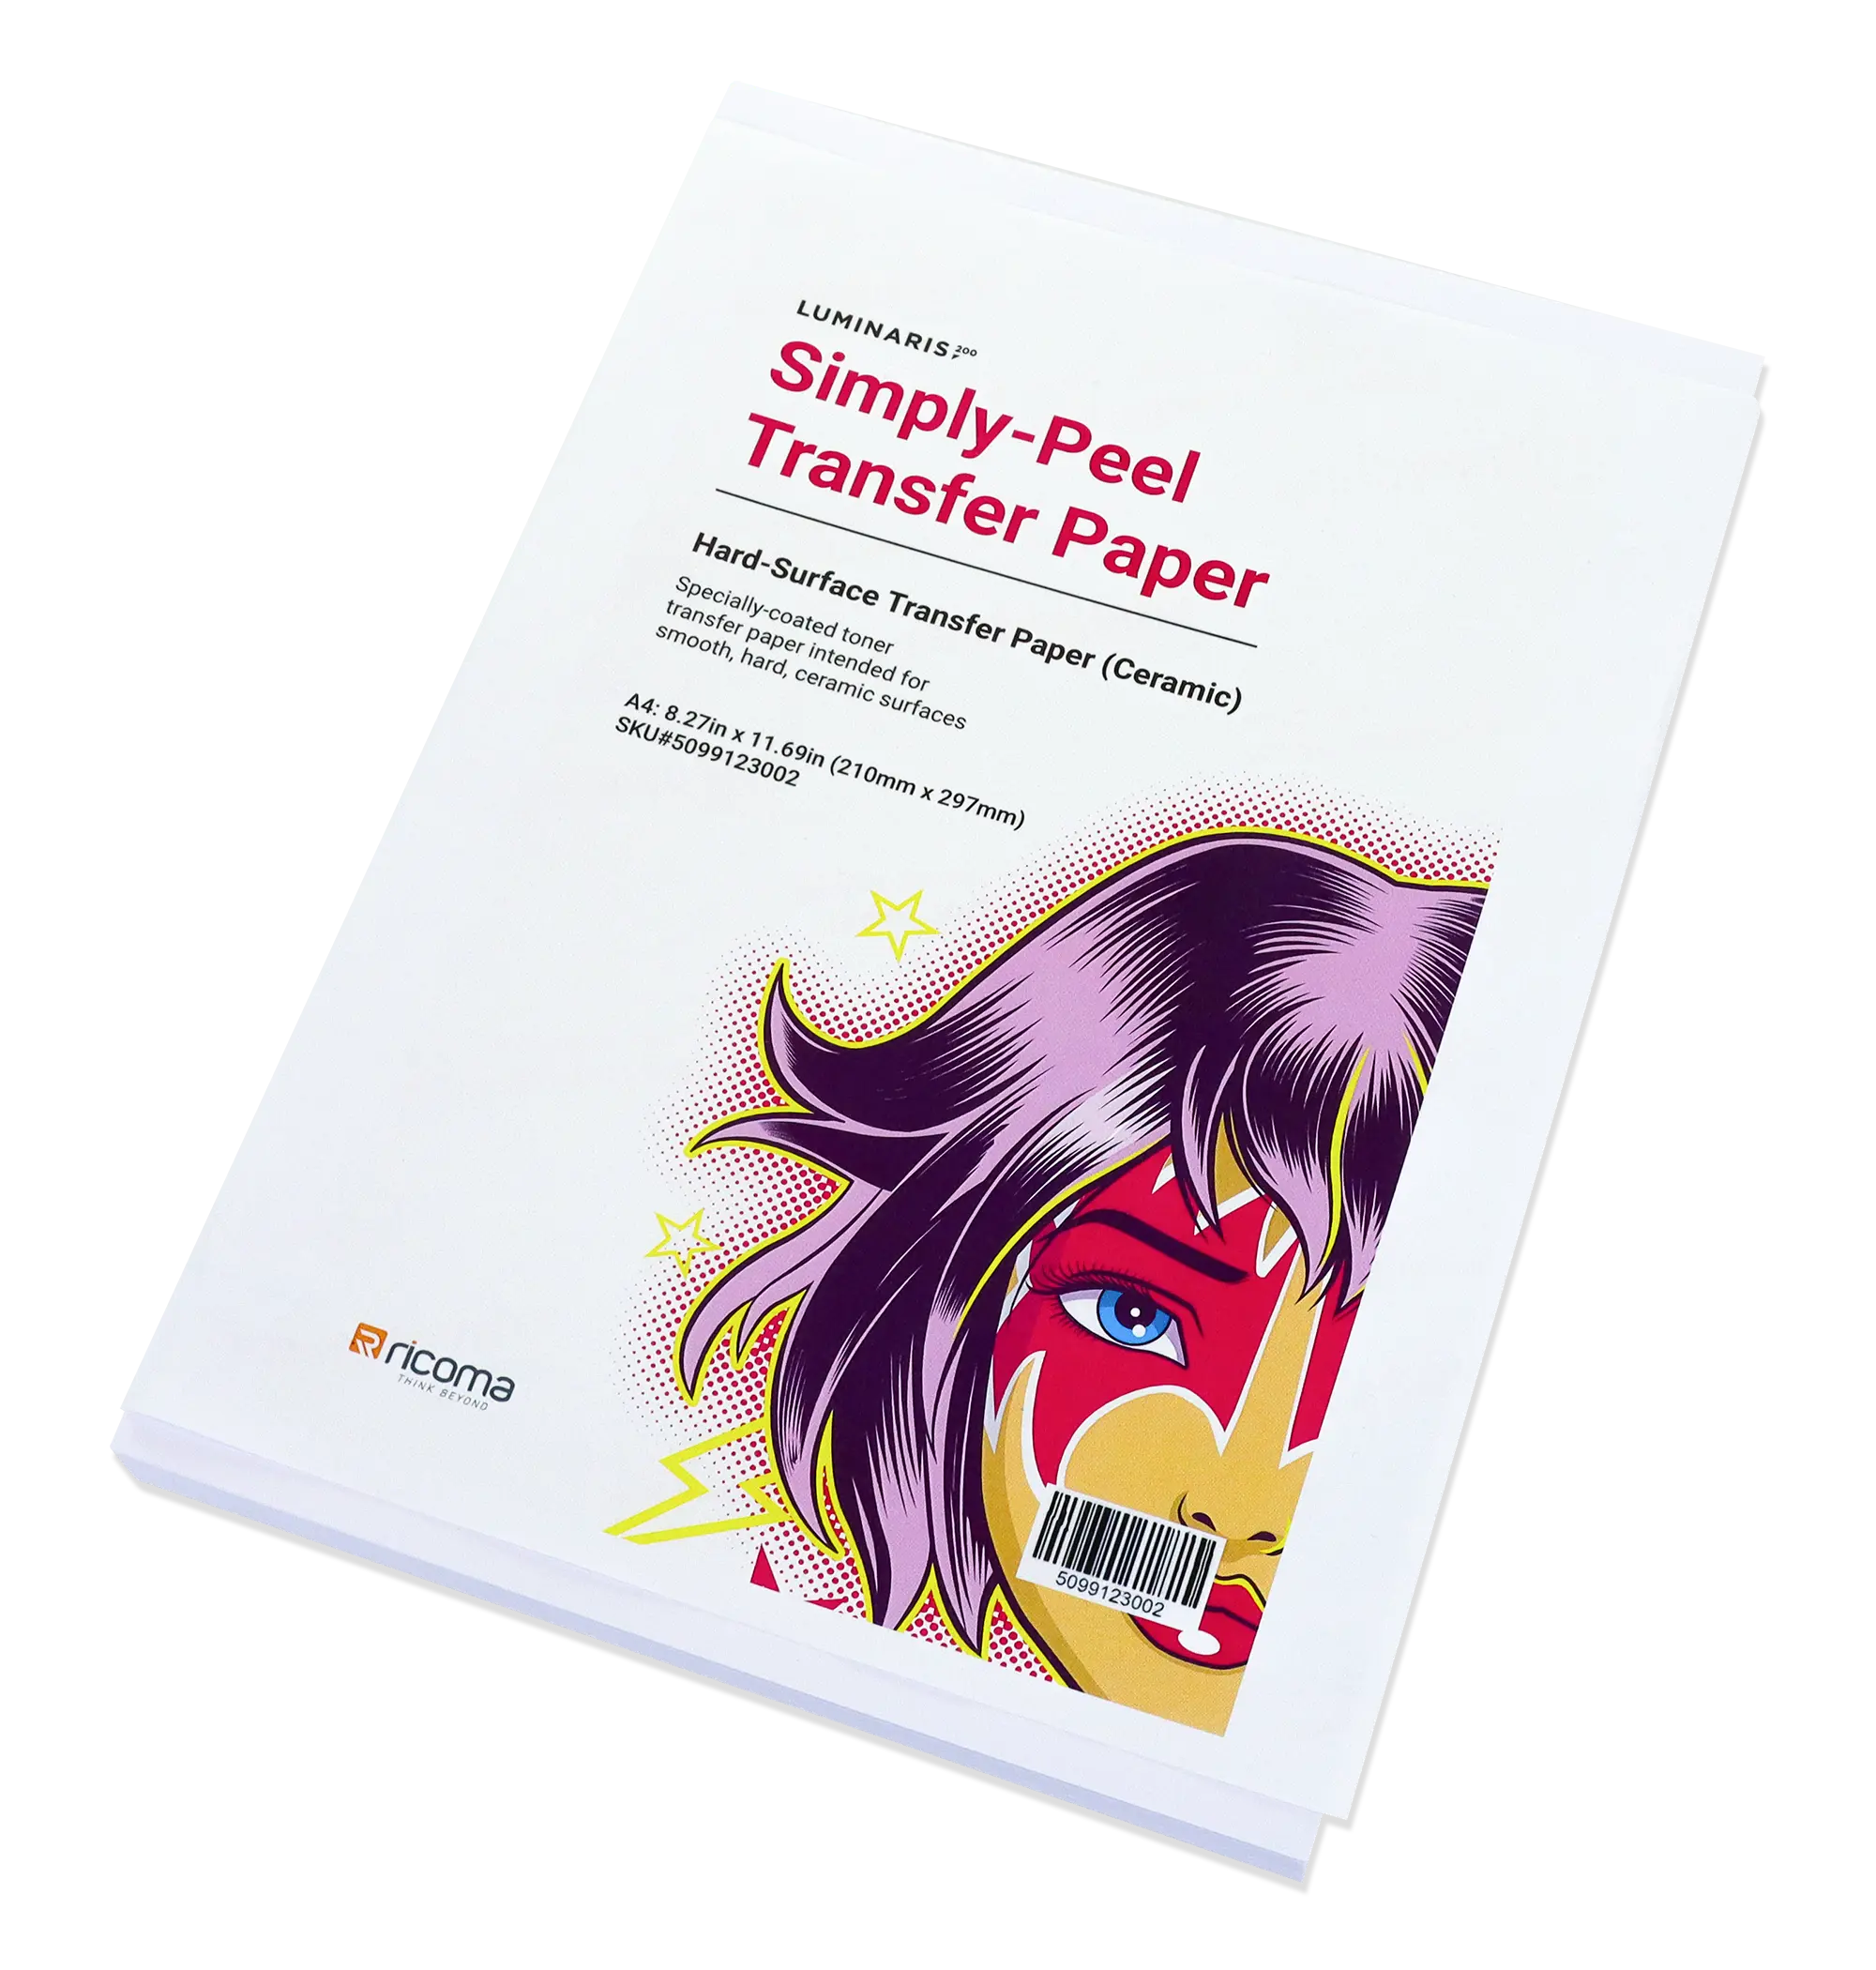 Luminaris 200 Simply-Peel Media Hard Surface 1-Step Transfer Paper (10